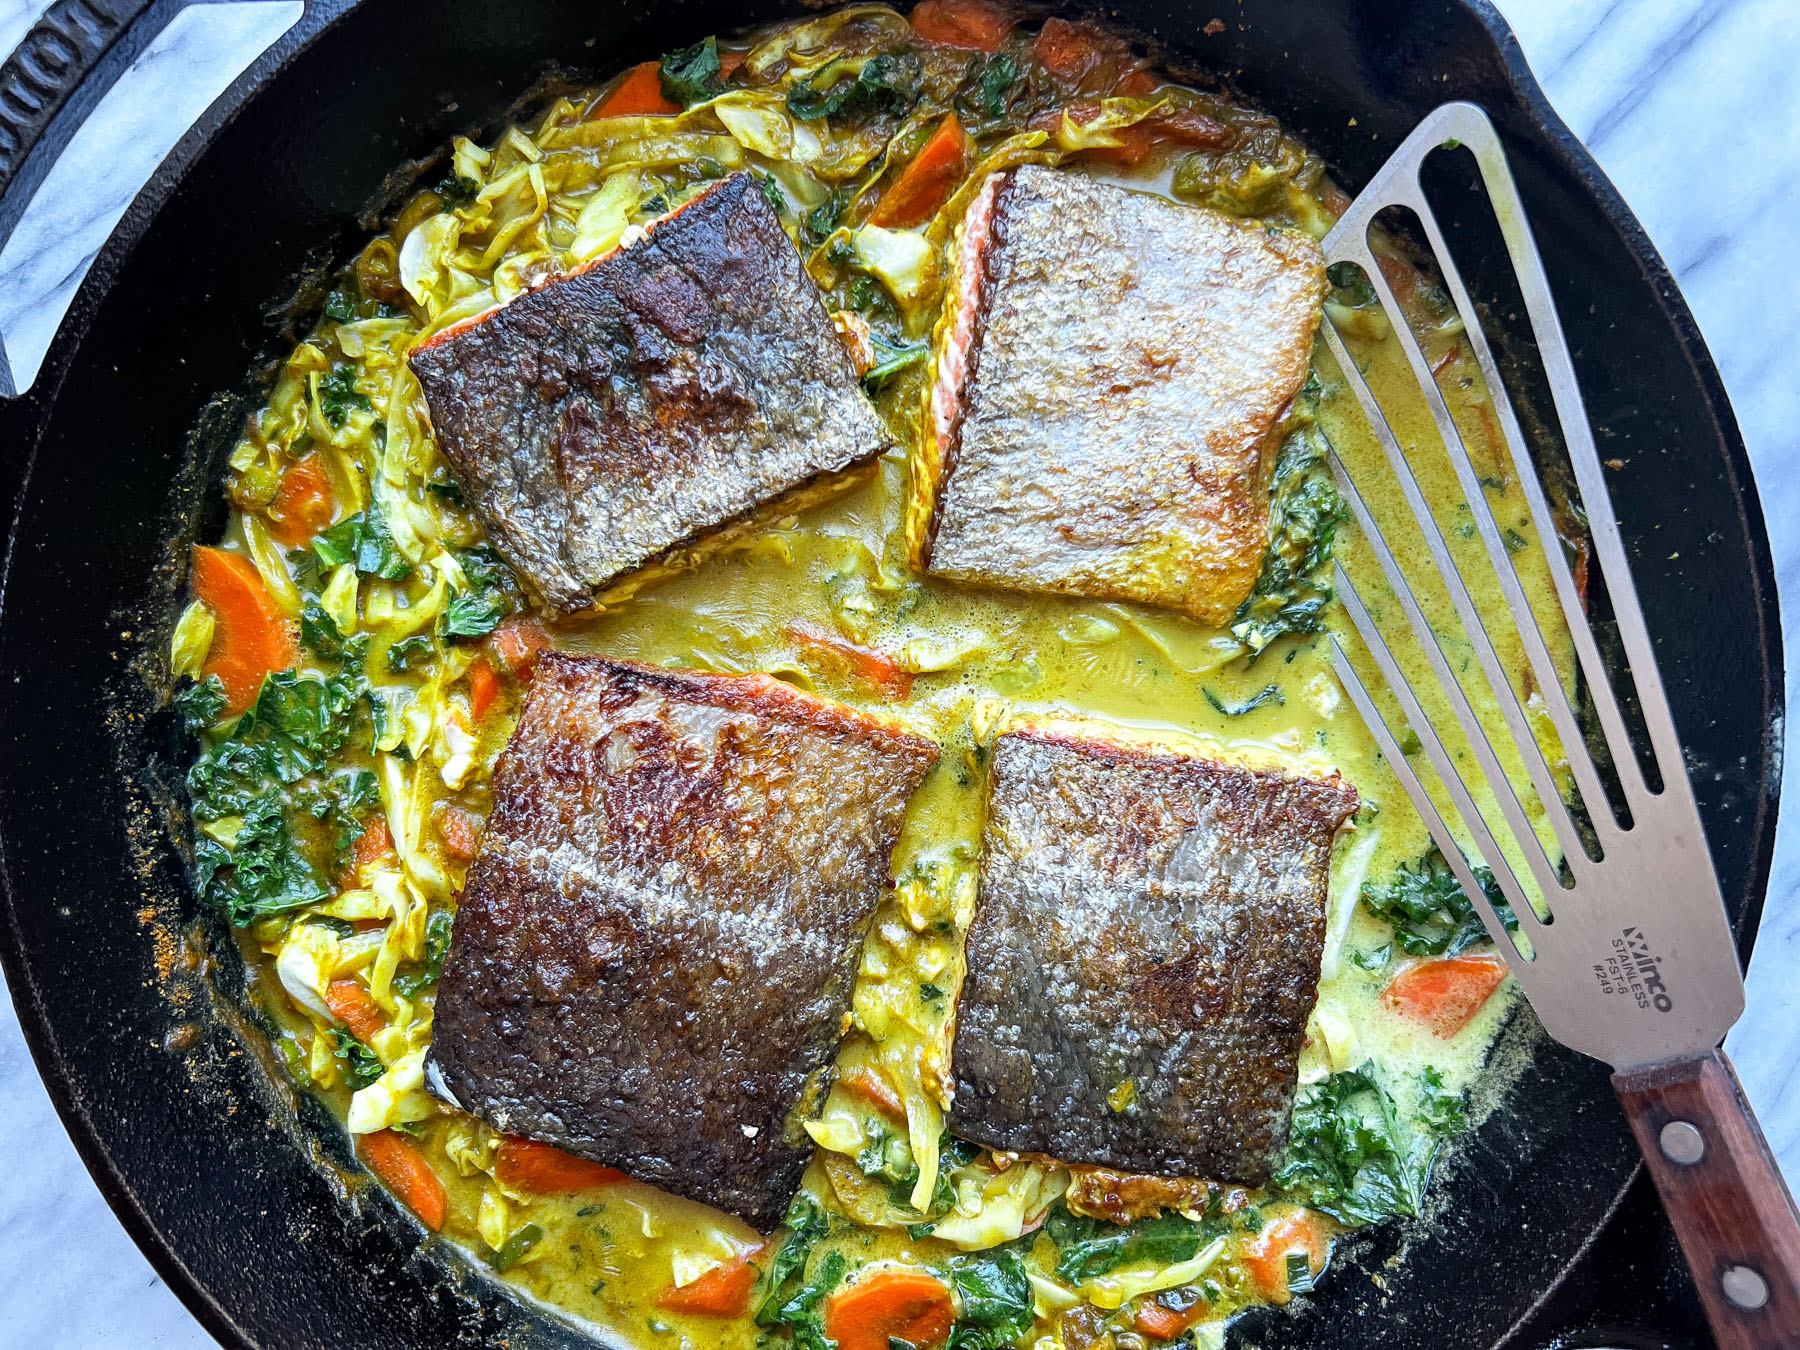 Lodge Cook-It-All - Grilling Salmon & Stir Fry Veggies 